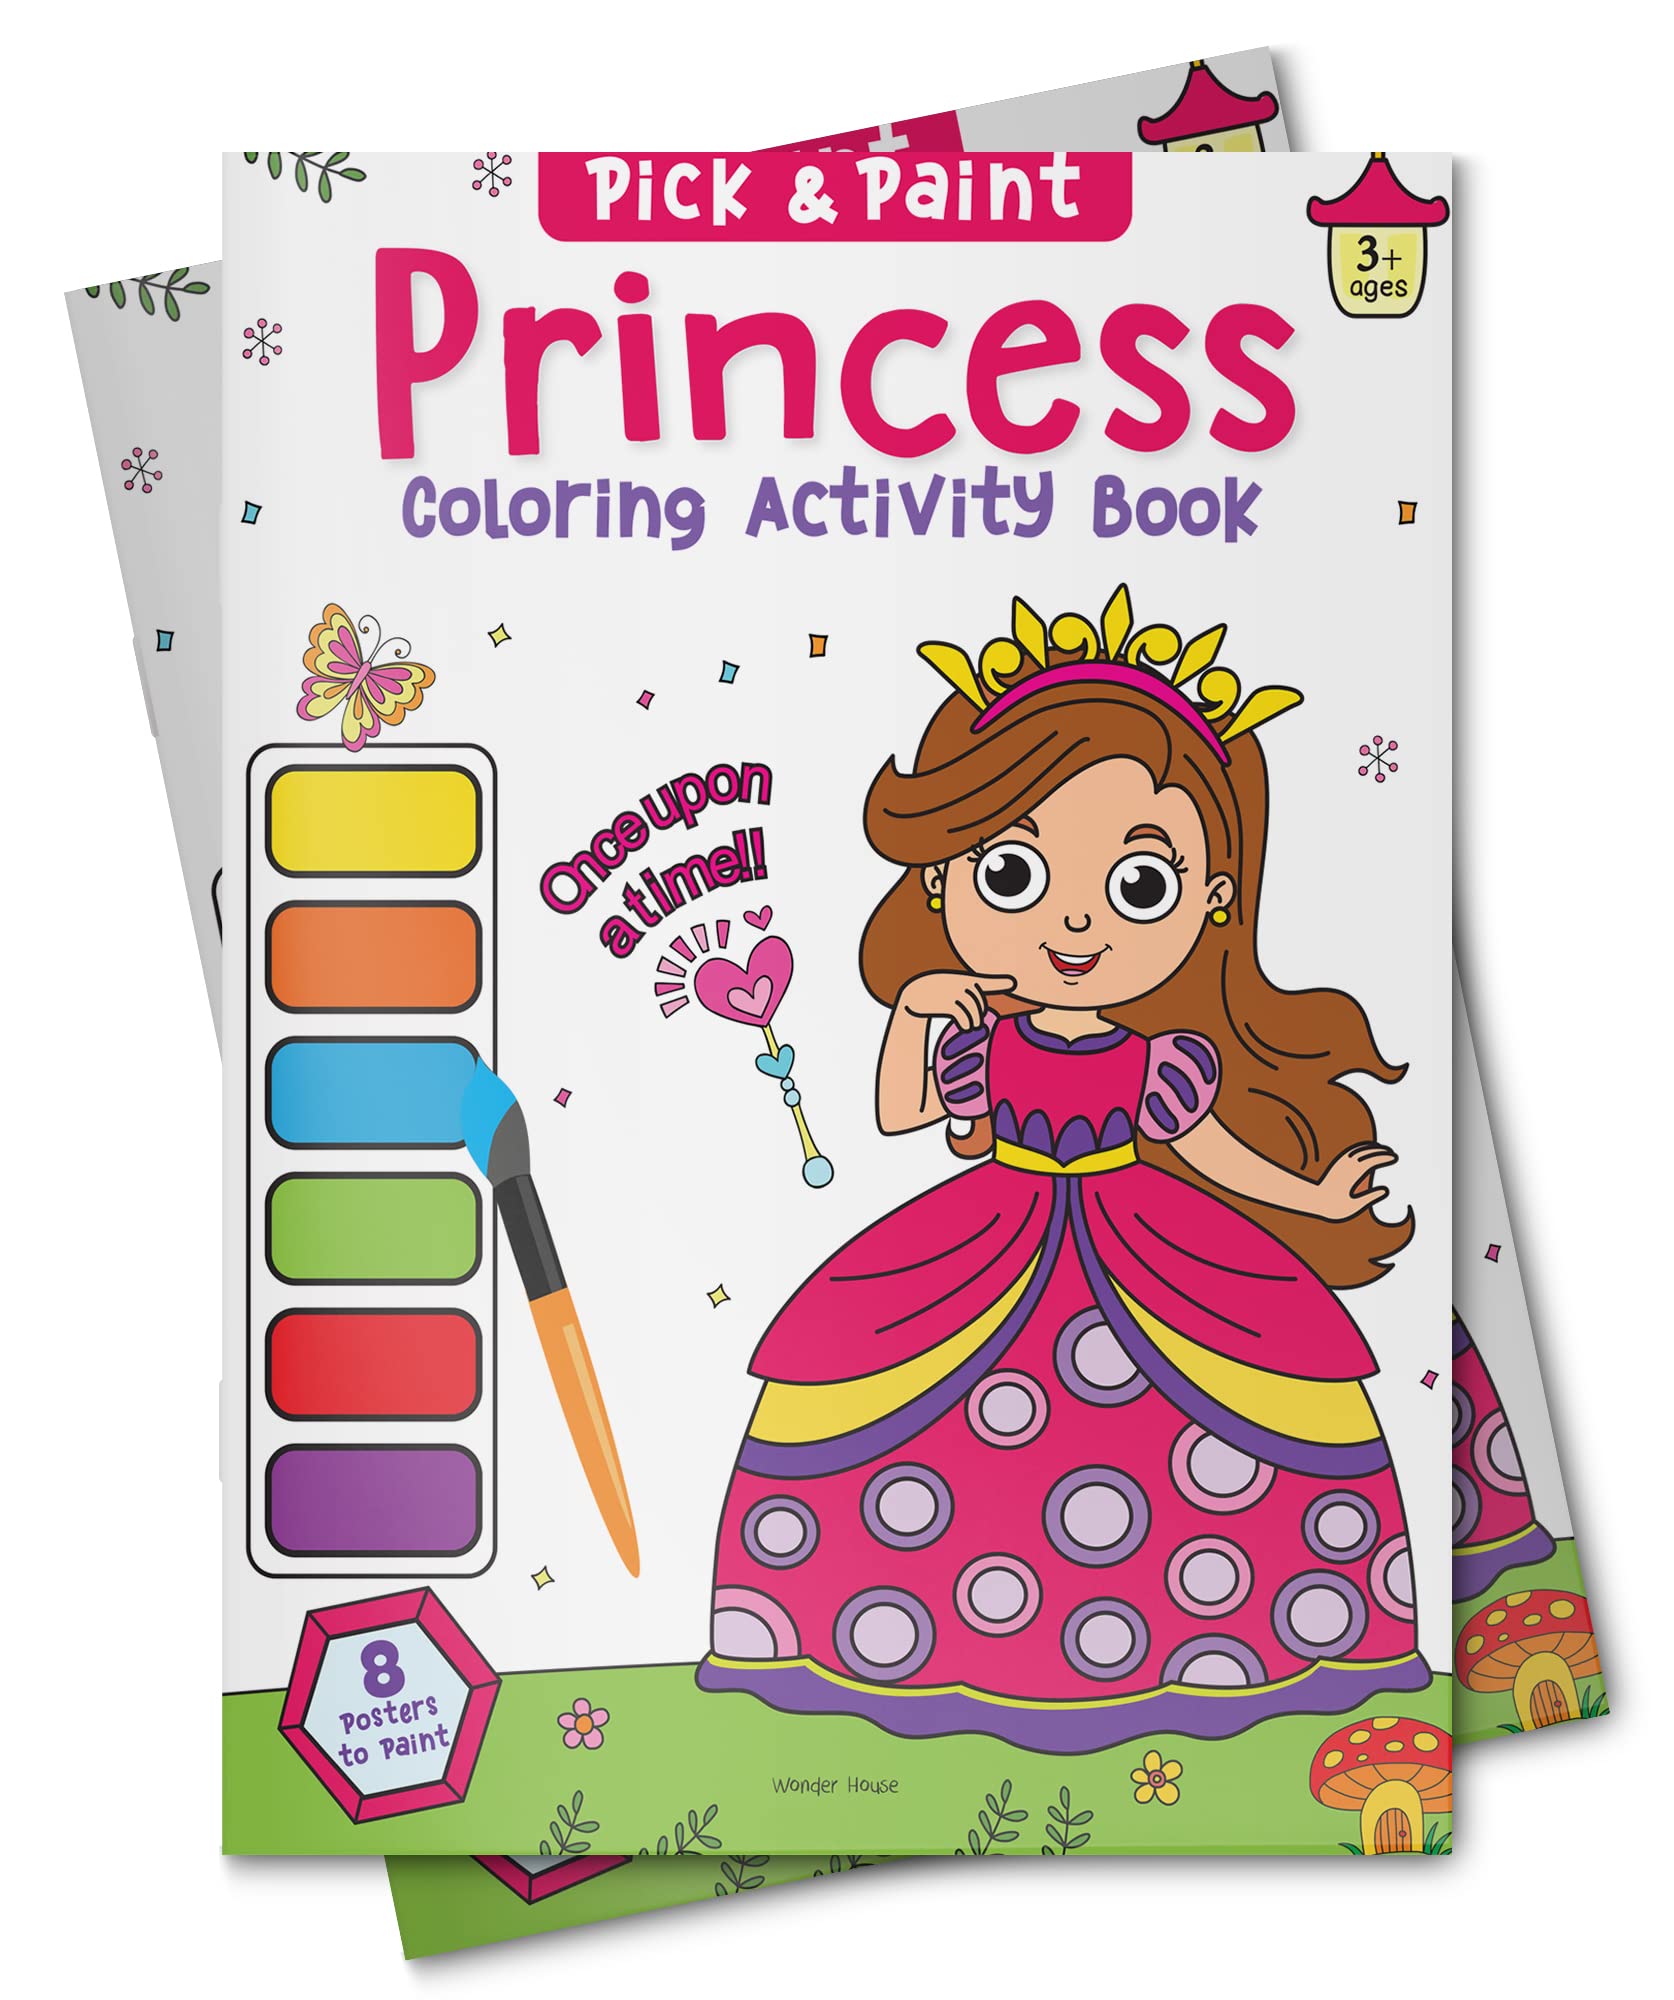 Princess: Pick & Paint Coloring Activity Book For Kids